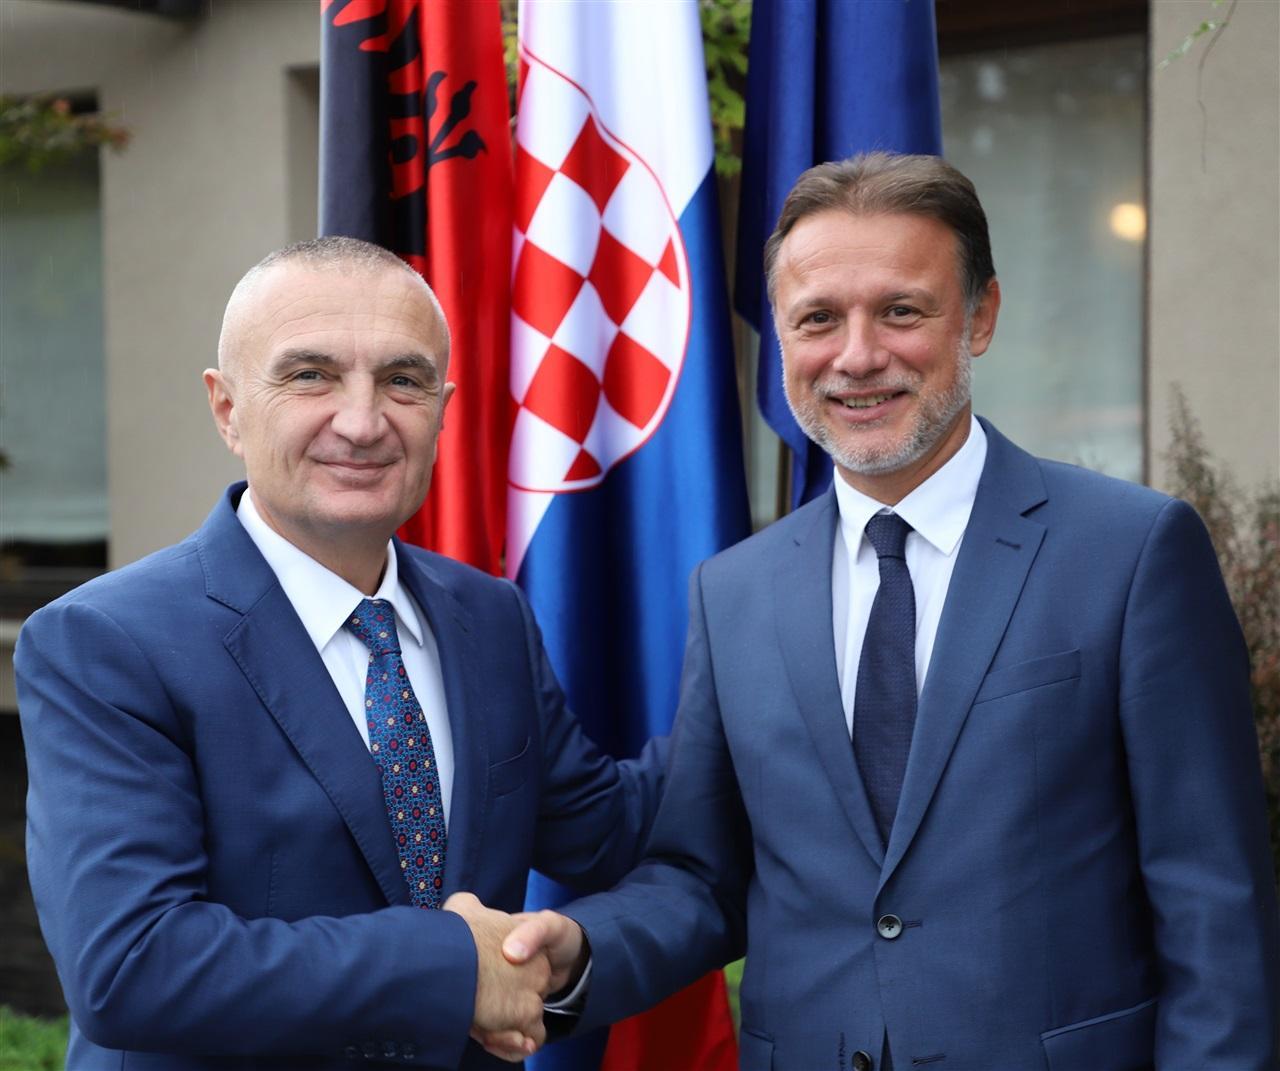 [Oct 31] Croatian Speaker meets with Albanian President